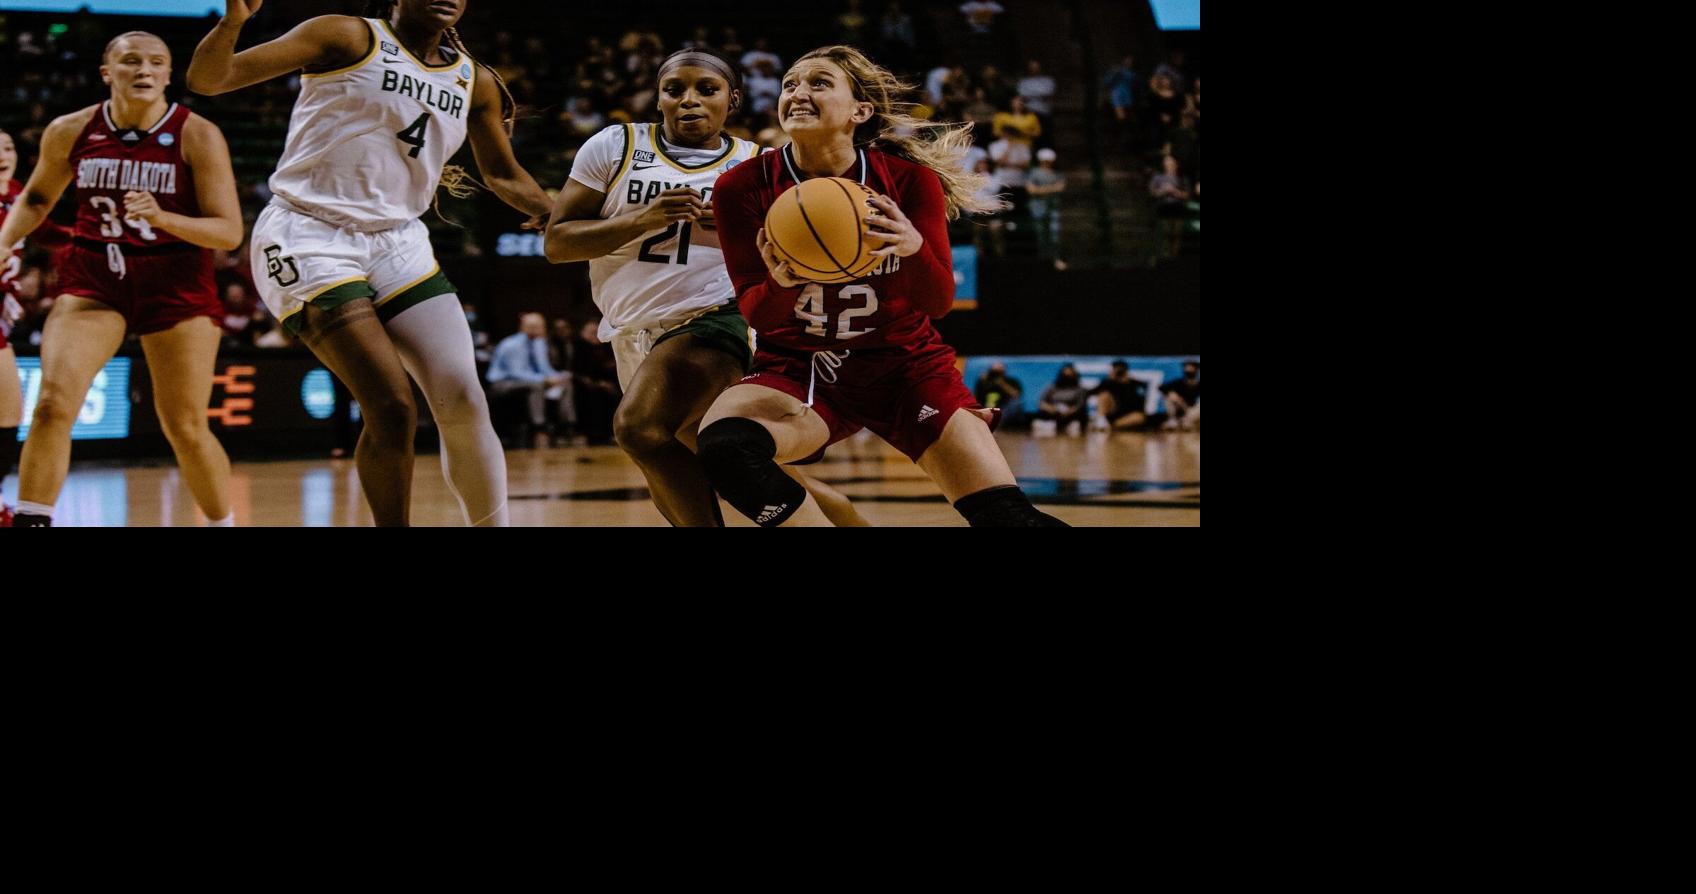 Maddie Krull ‘loves to compete.’ Now she’s (officially) joining the Nebraska women’s basketball team